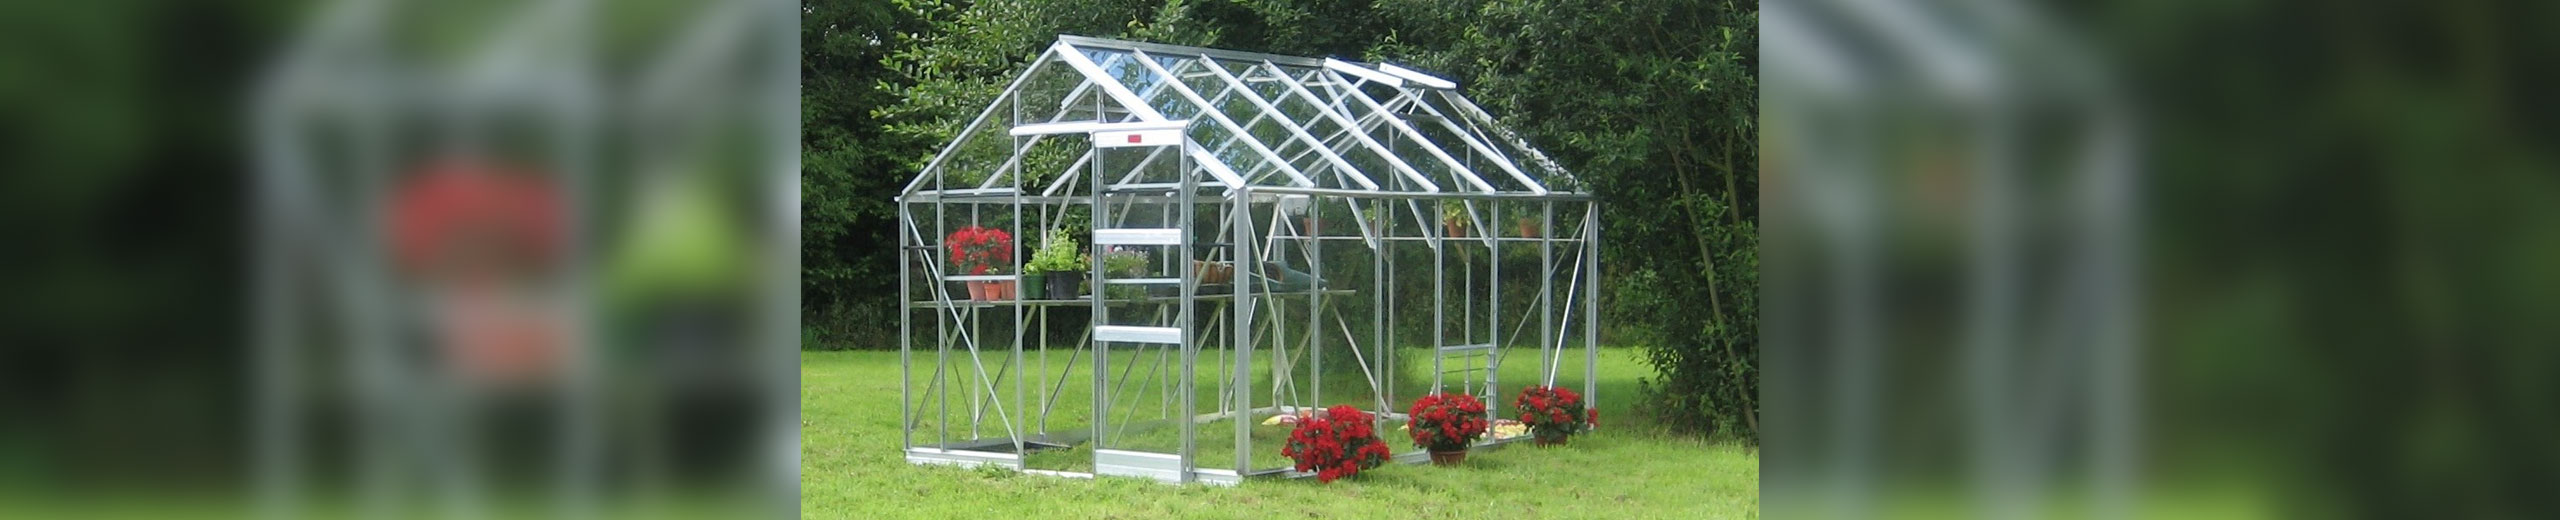 12 x 8 Belmont greenhouse